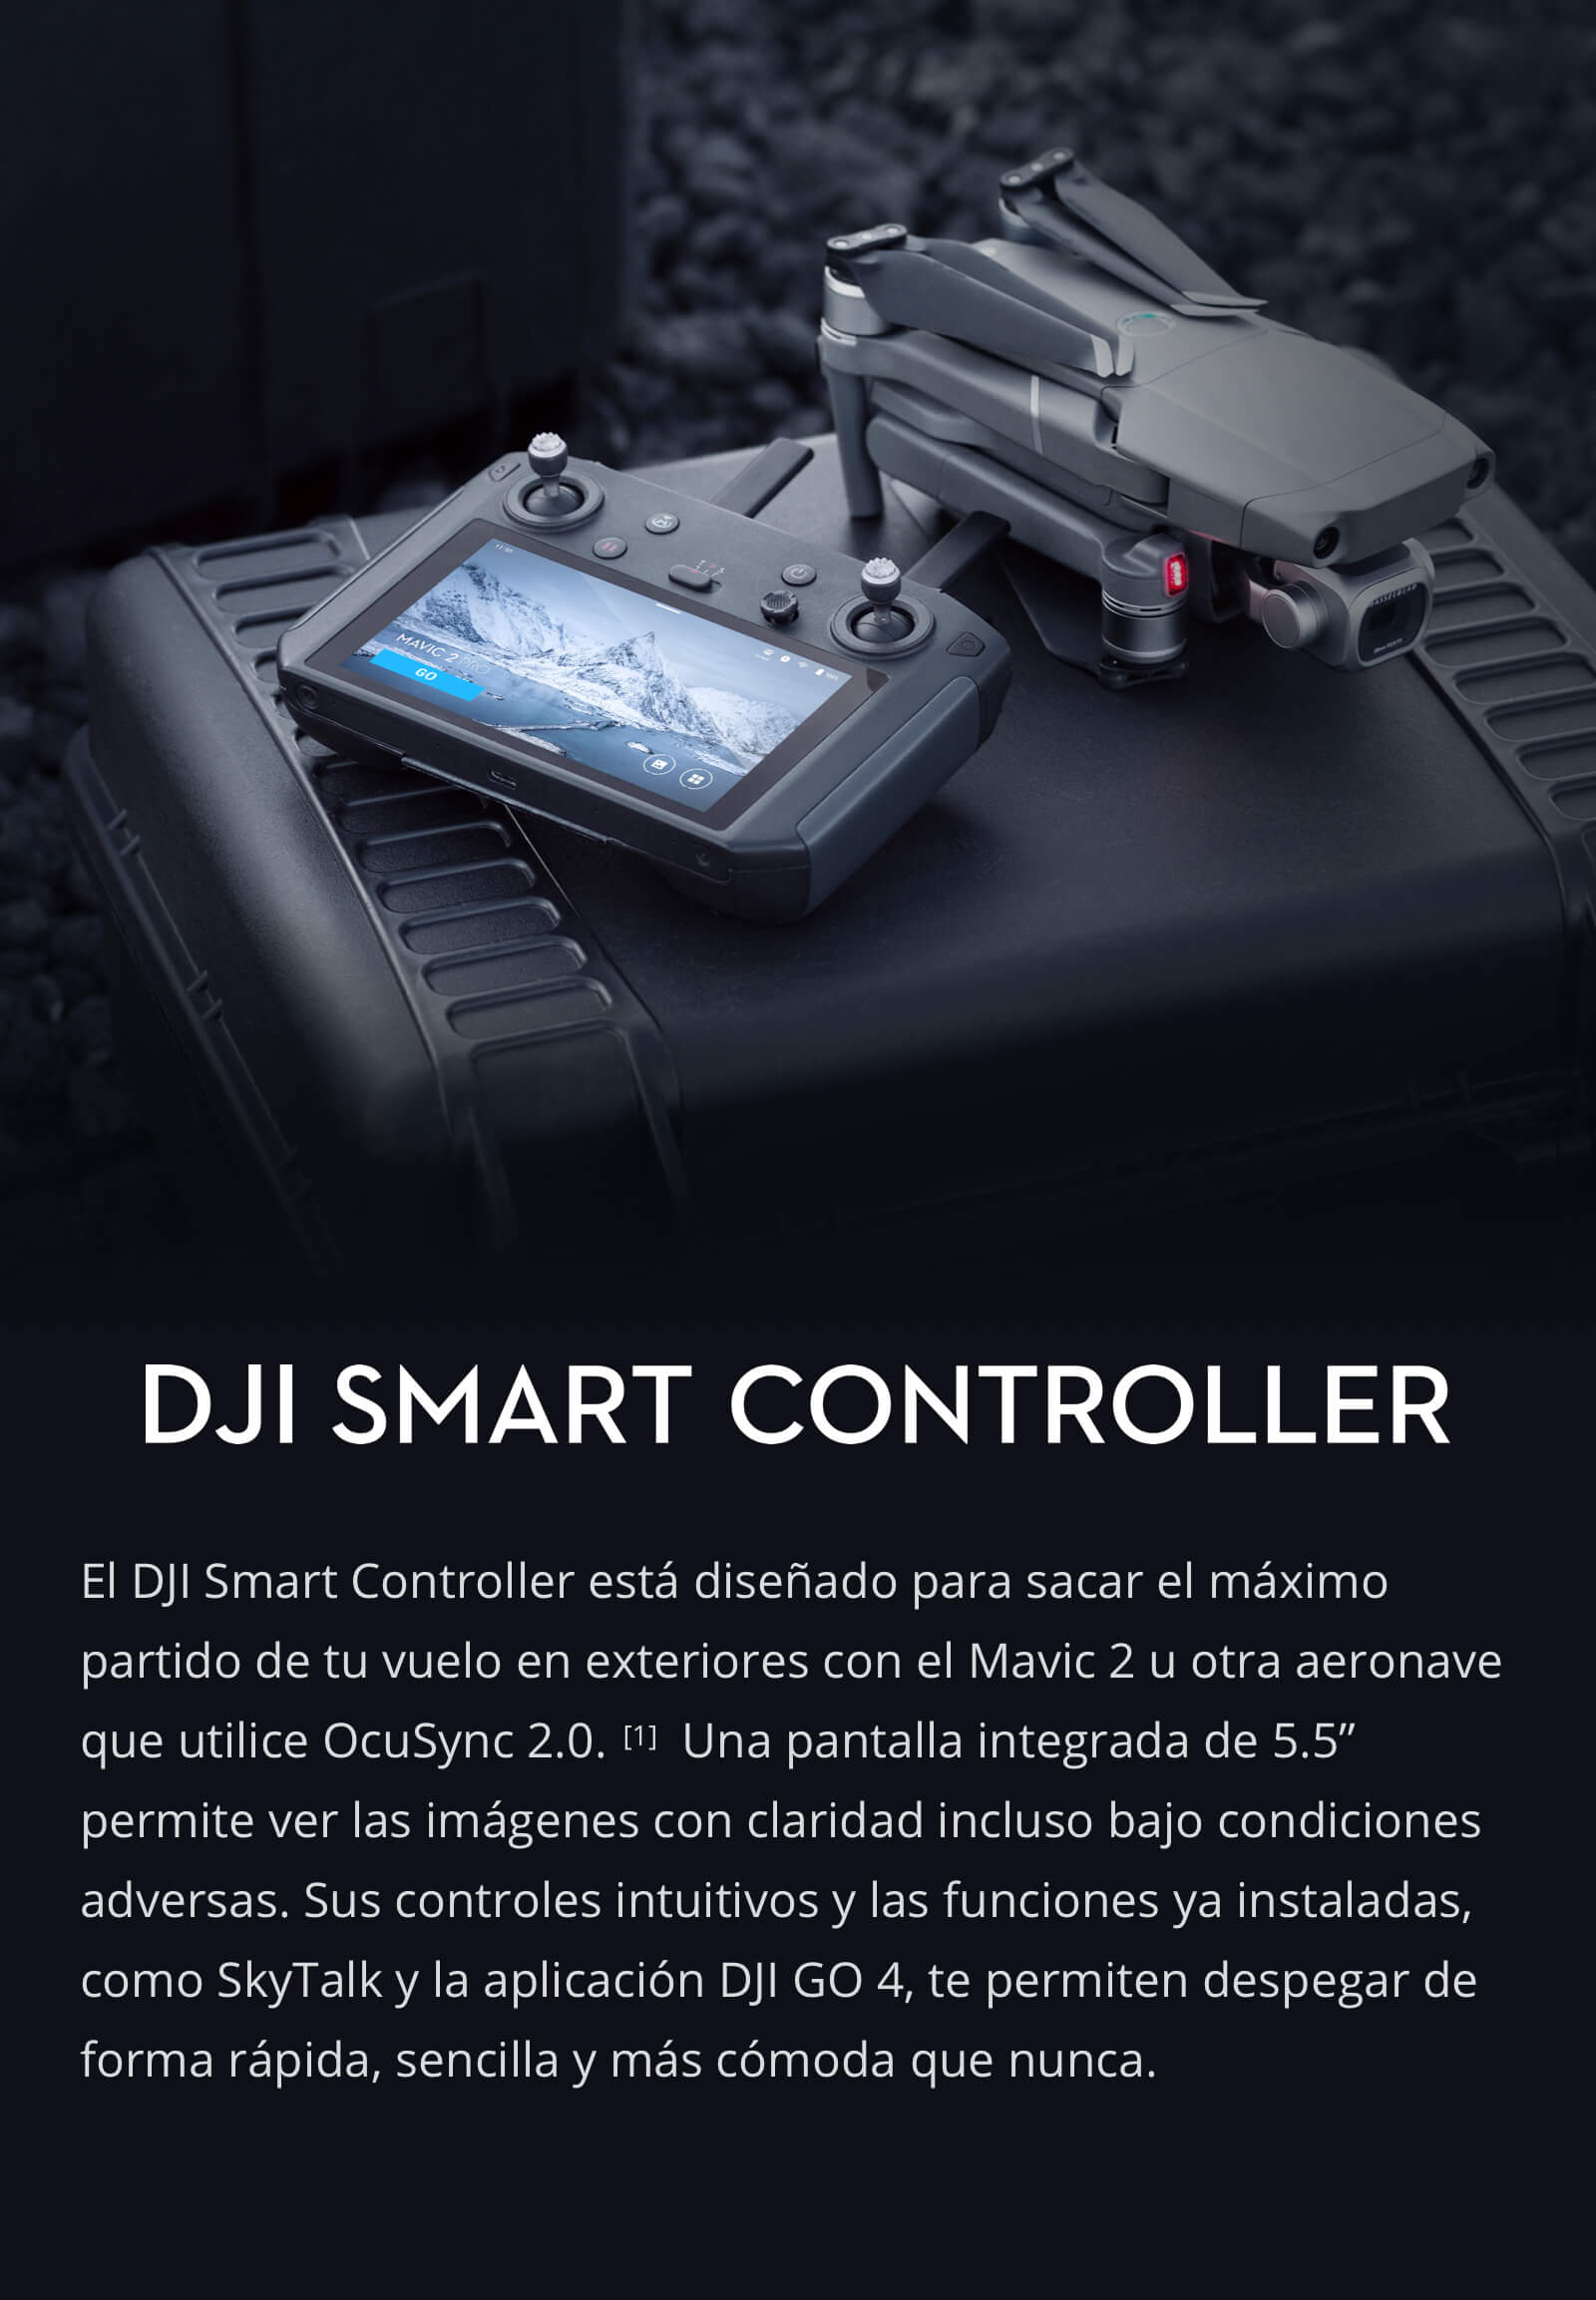 DJI Smartcontroller para Mavic 2 y Mavic 2 Enterprise